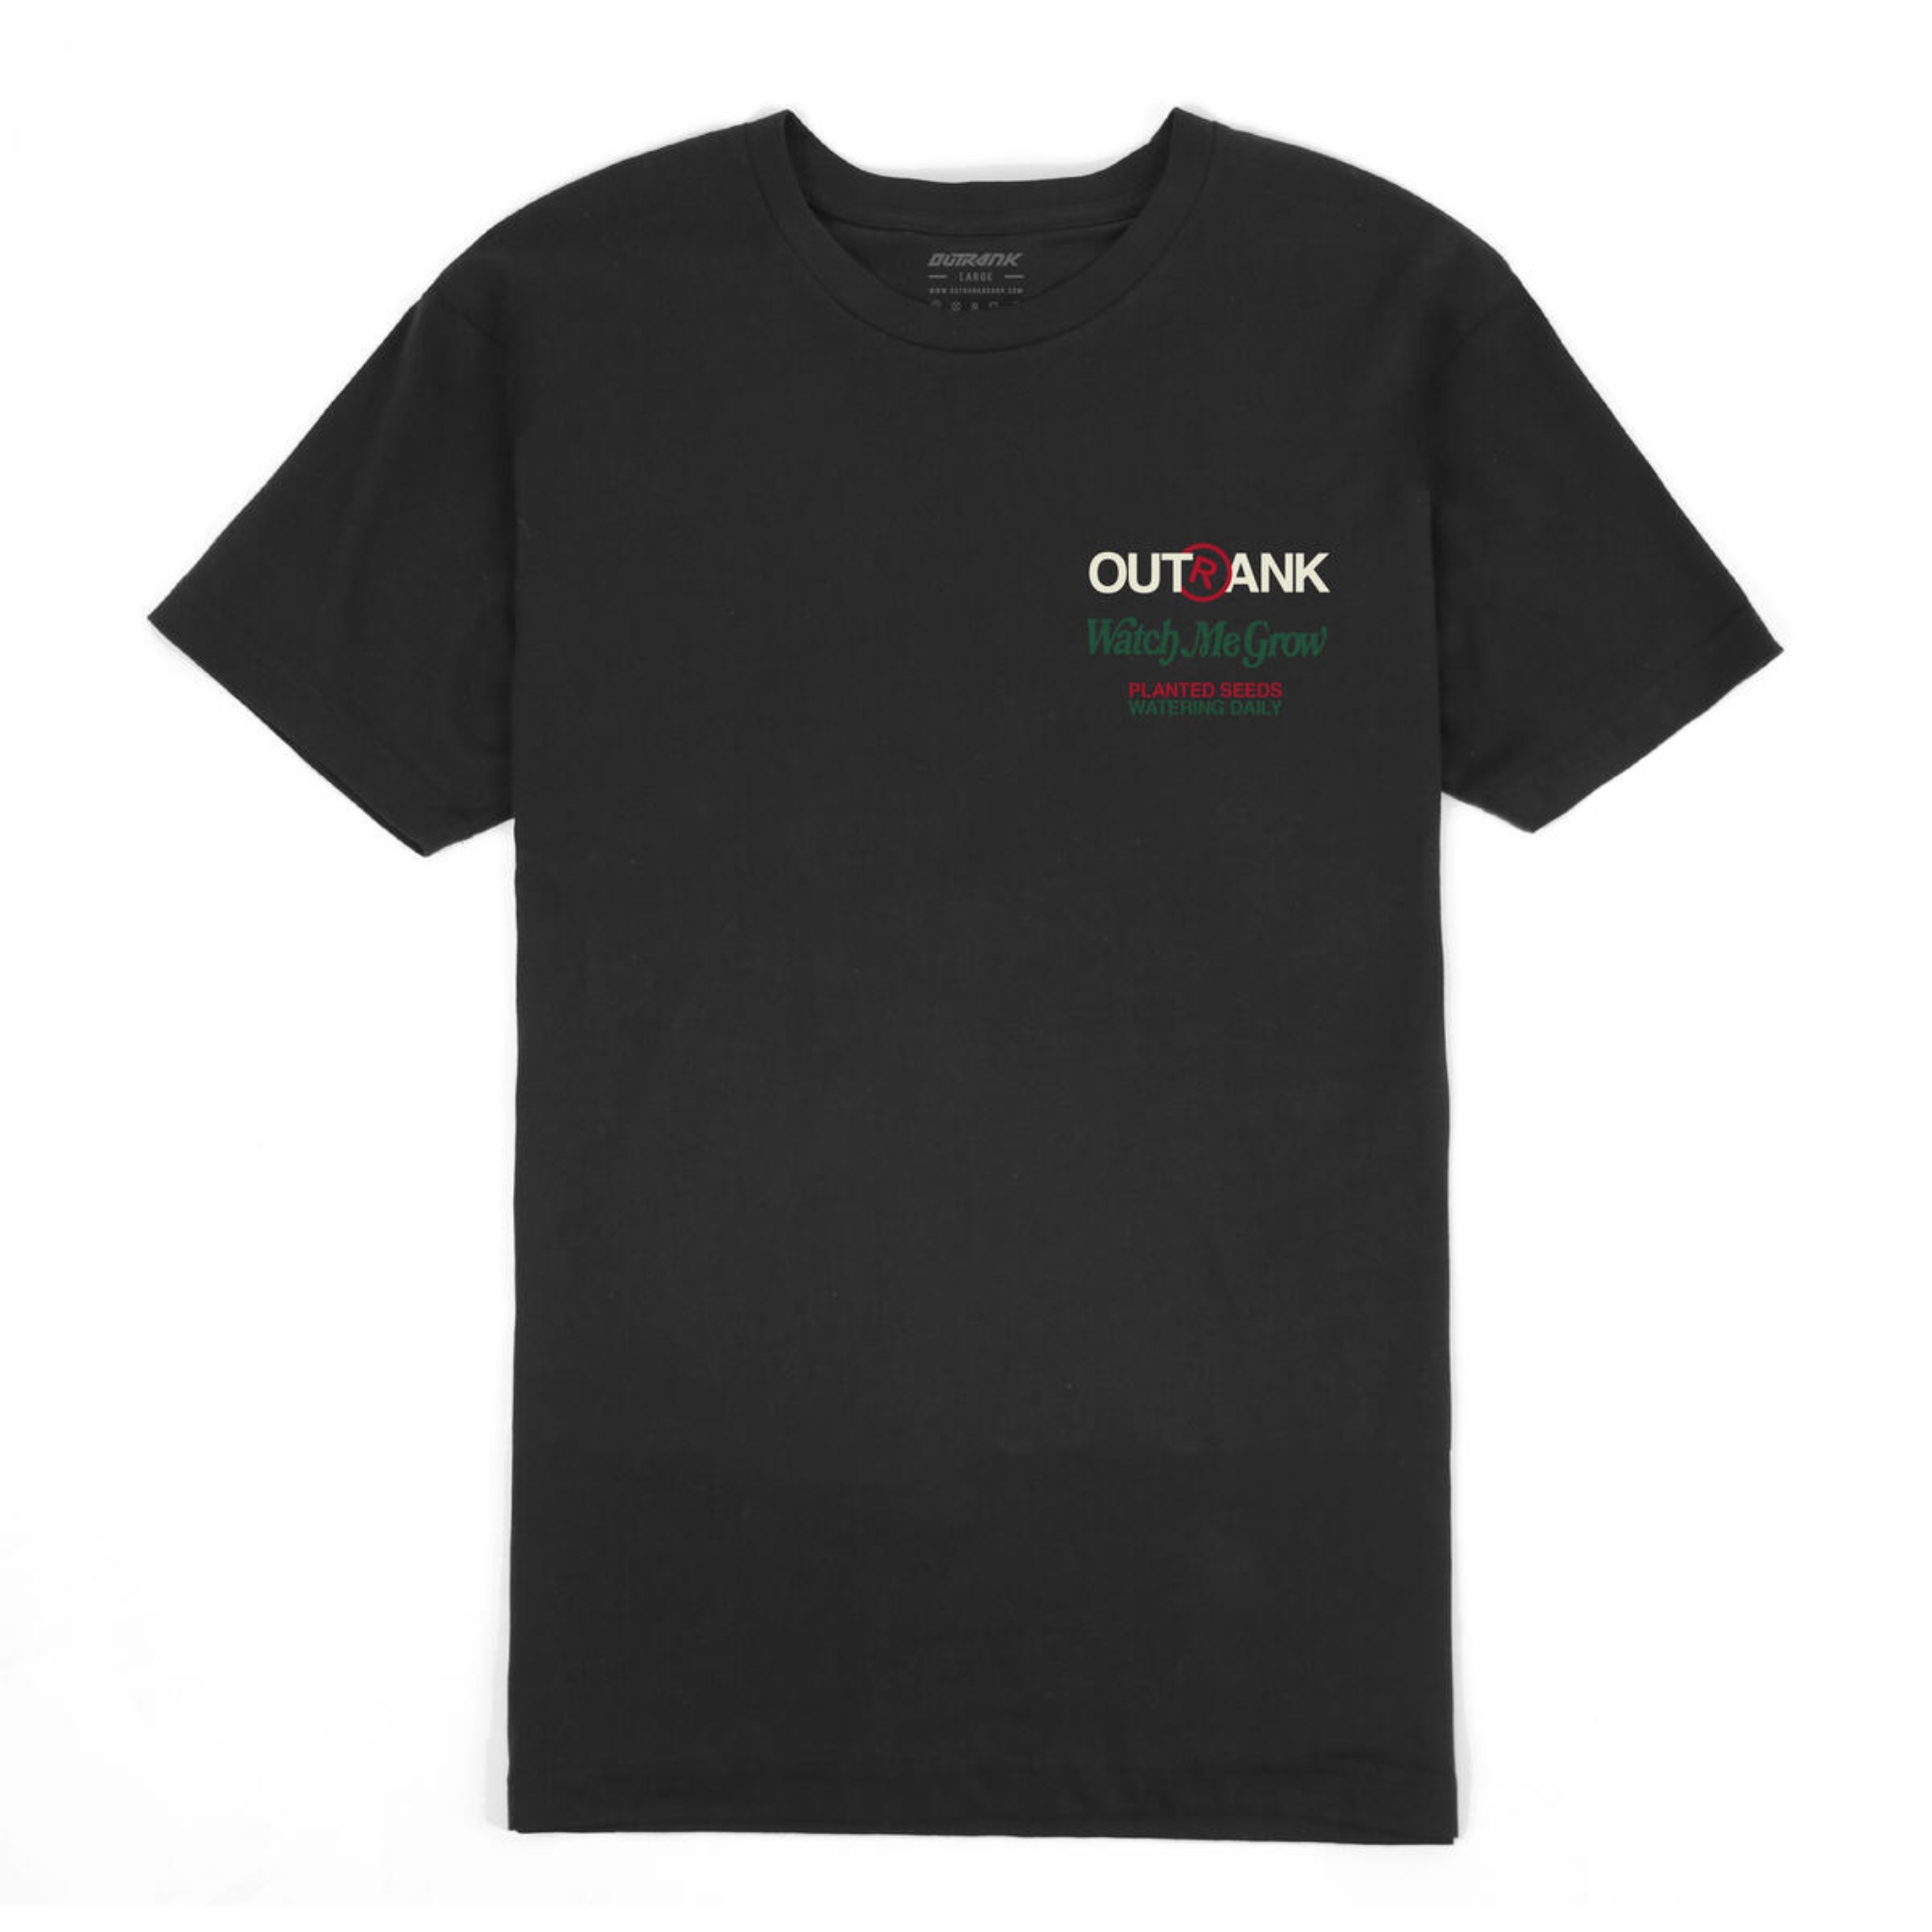 Outrank Watch Me Grow T-Shirt (Black)